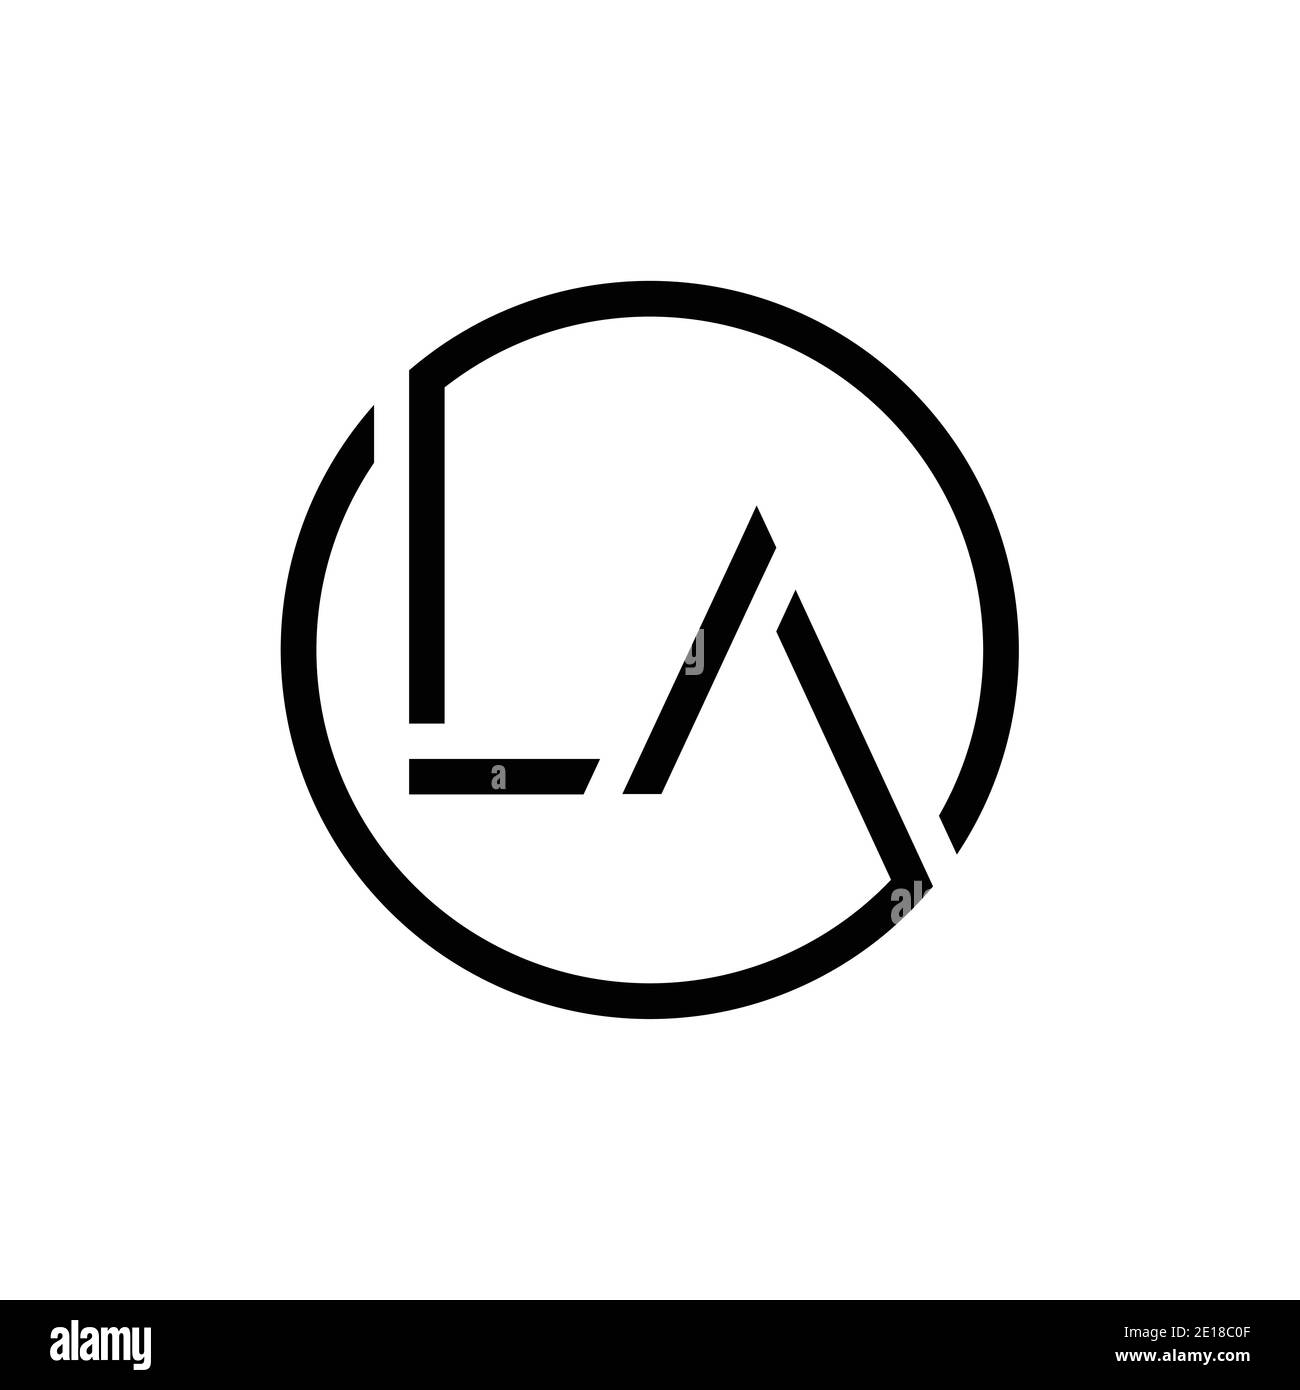 Initial Circle LA letter Logo Design vector Template. Abstract Letter LA logo Design Stock Vector